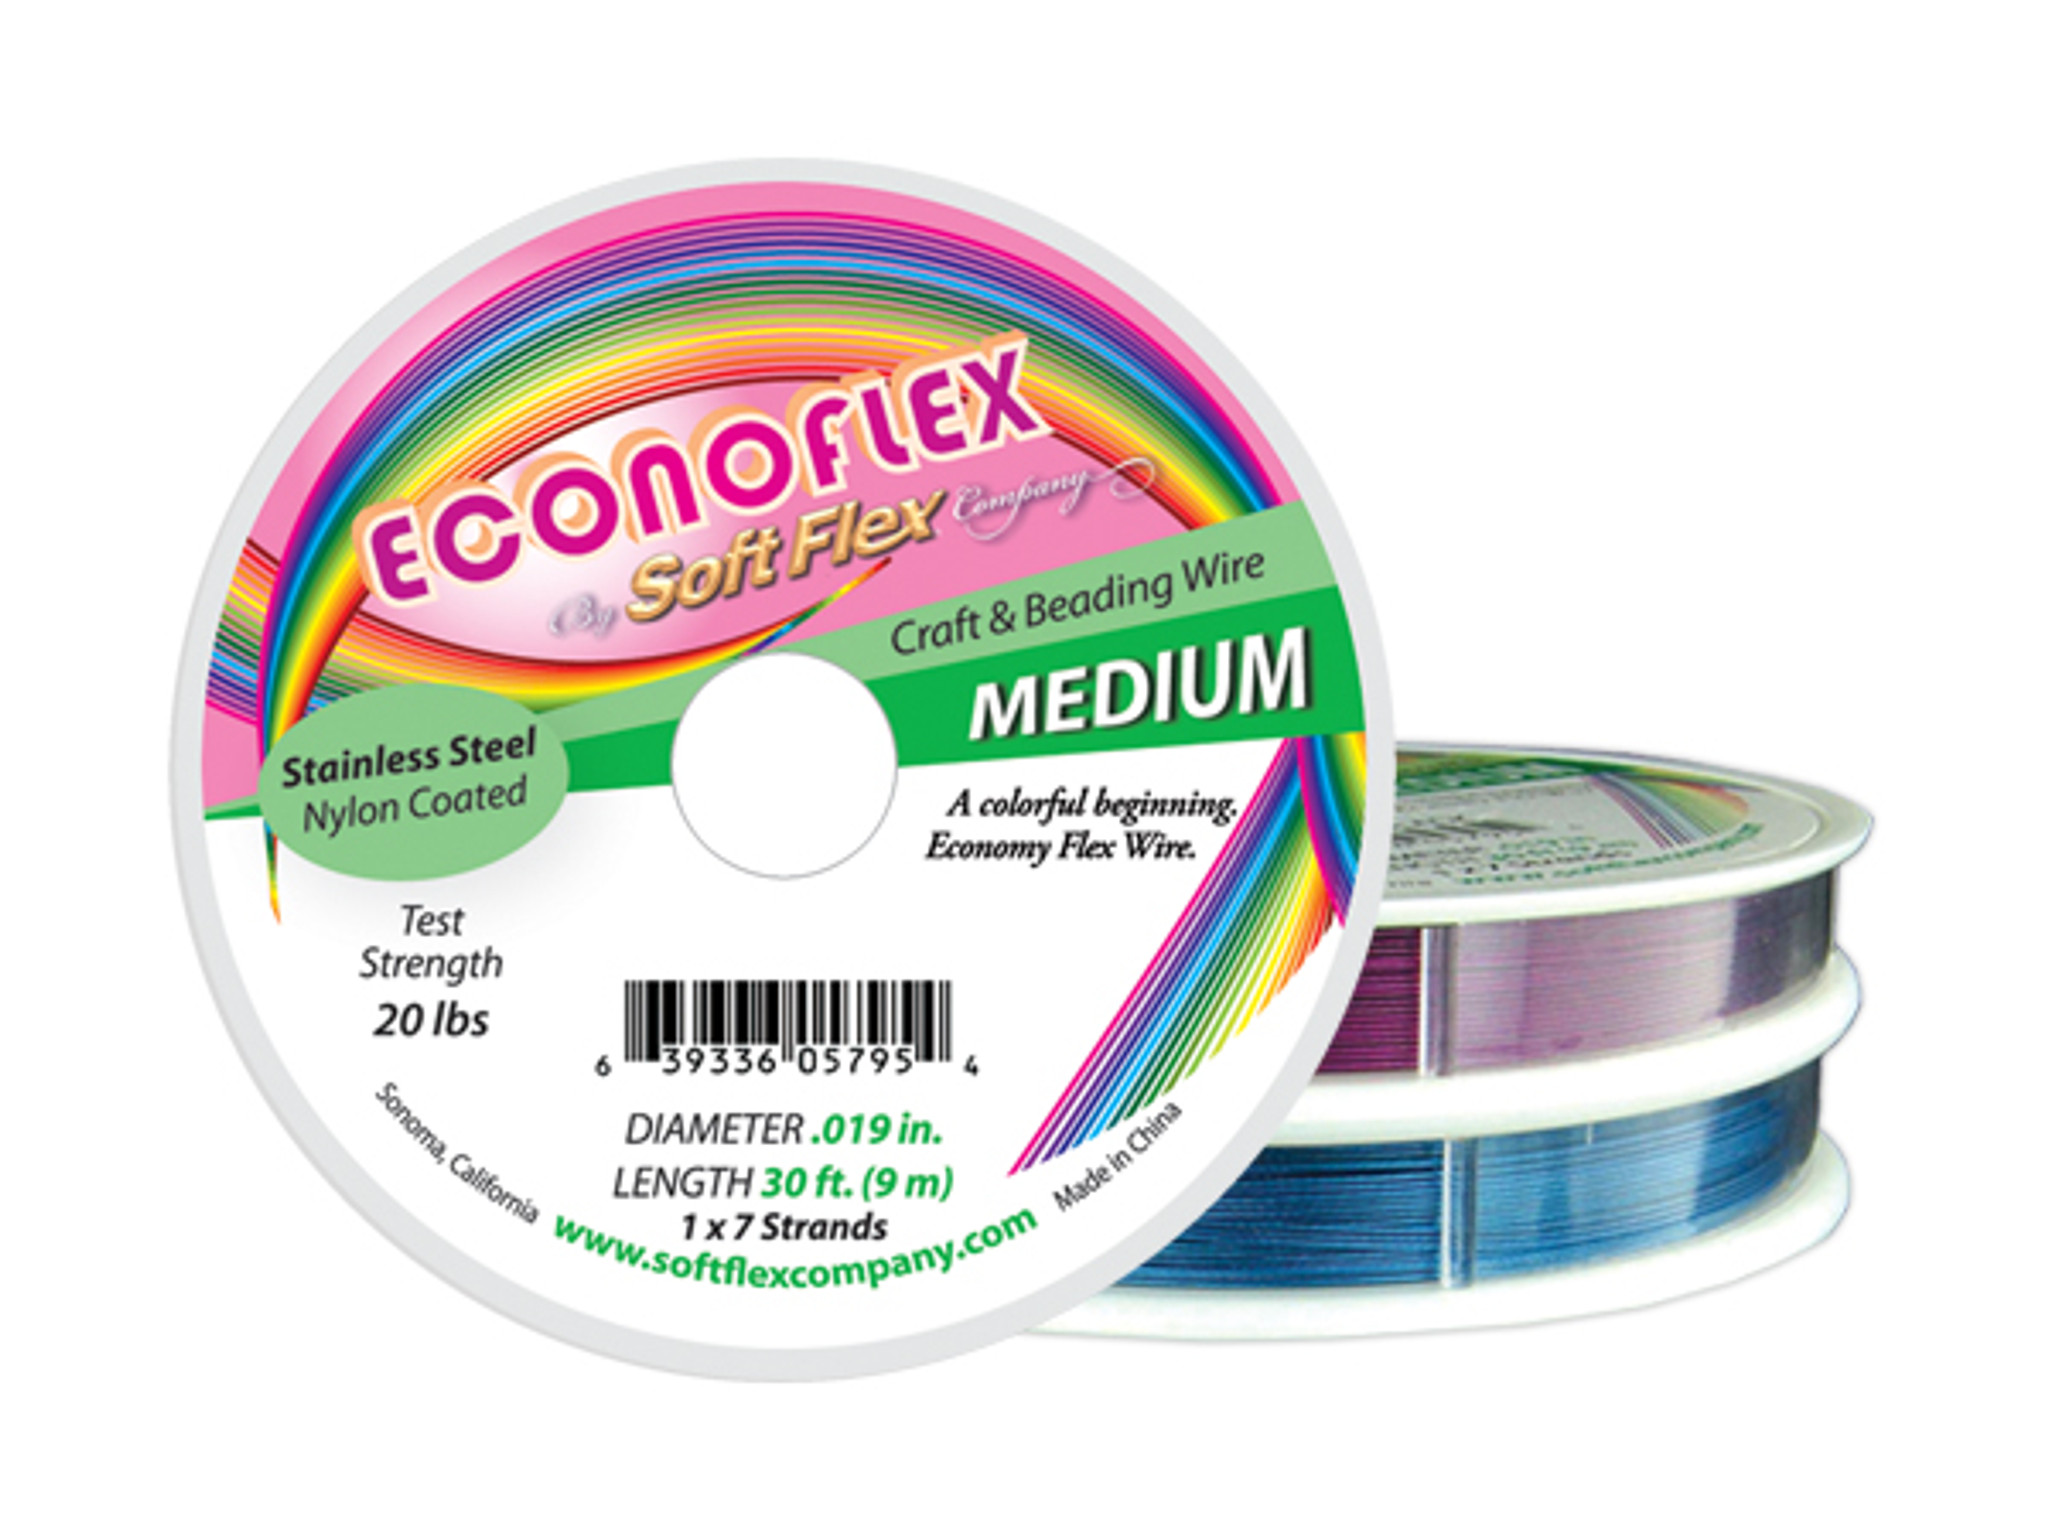 Extreme Flex Beading Wire - Soft Flex Company